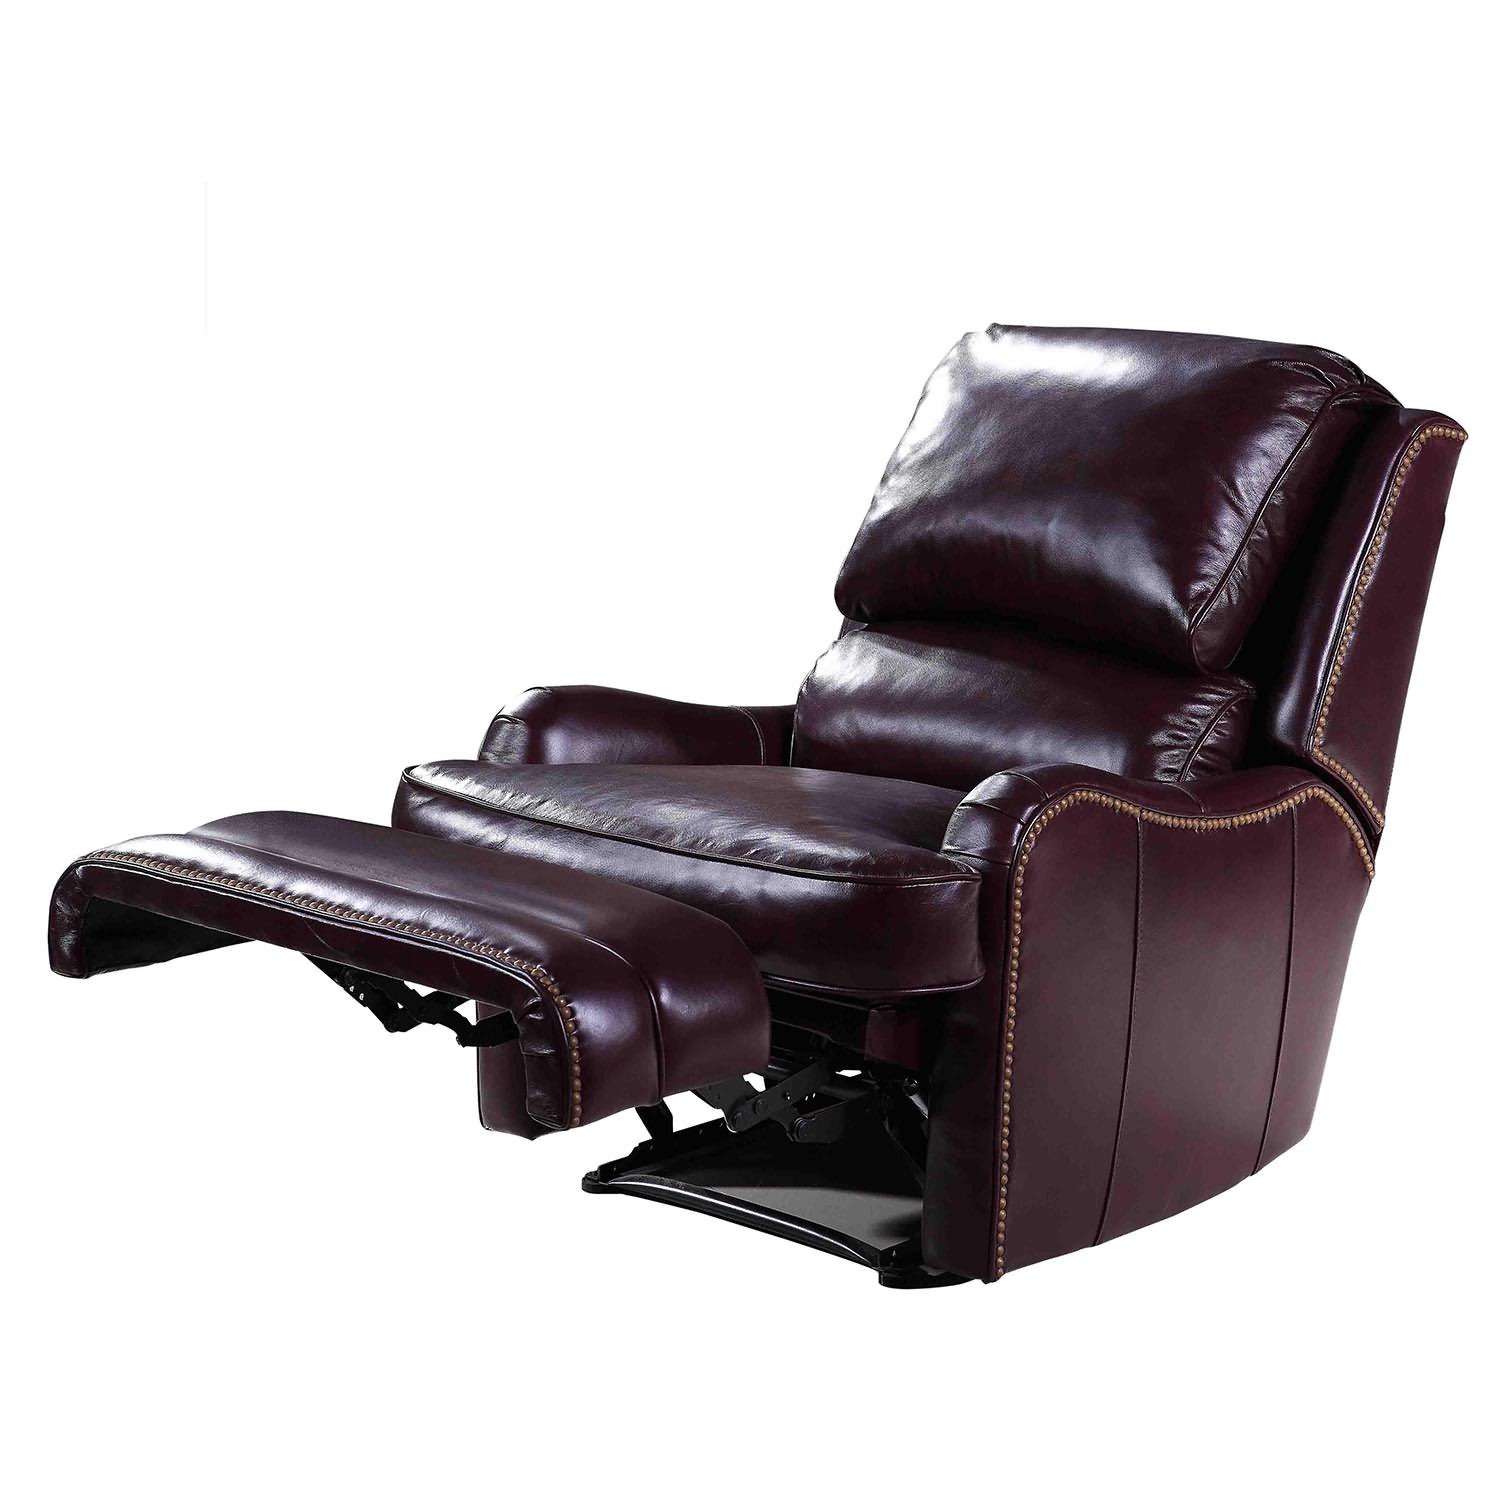 Function sofa|leather sofa|reclining sofa|Recliner